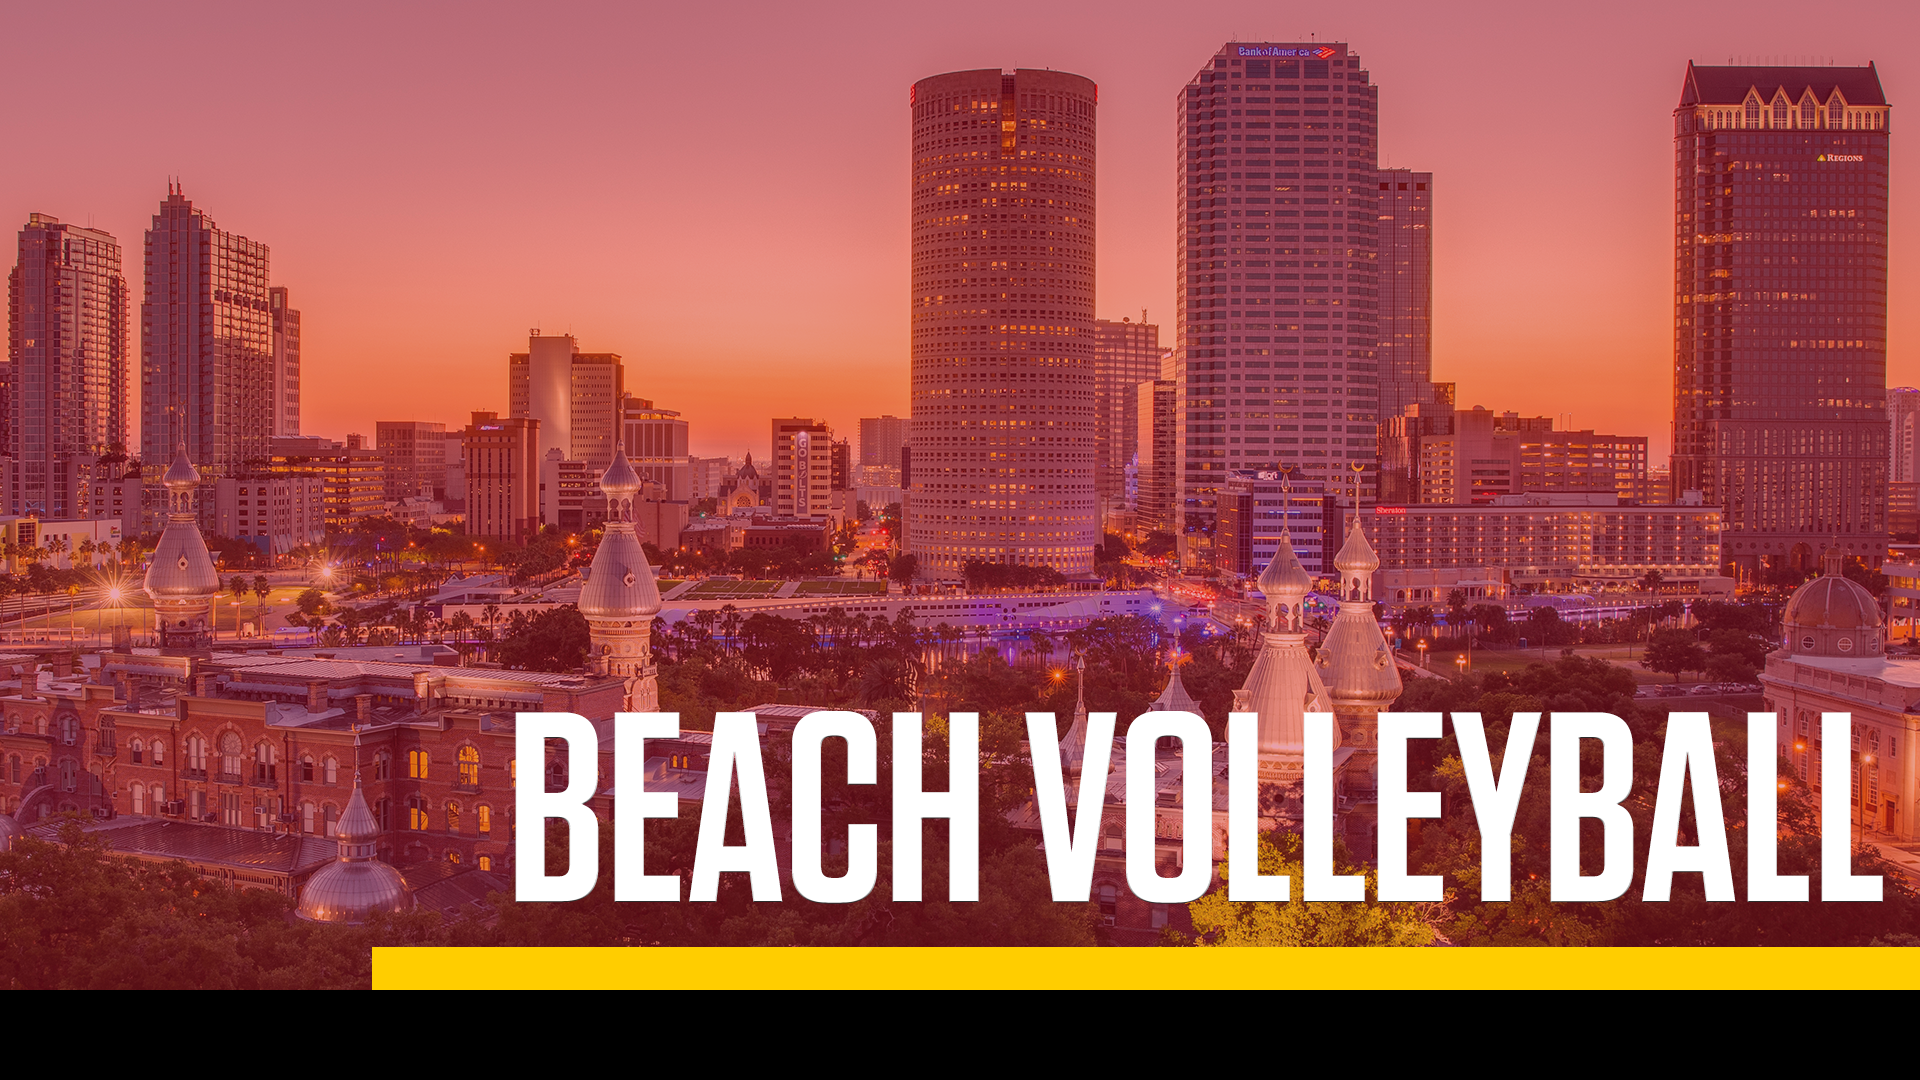 Beach Volleyball Recruiting Form